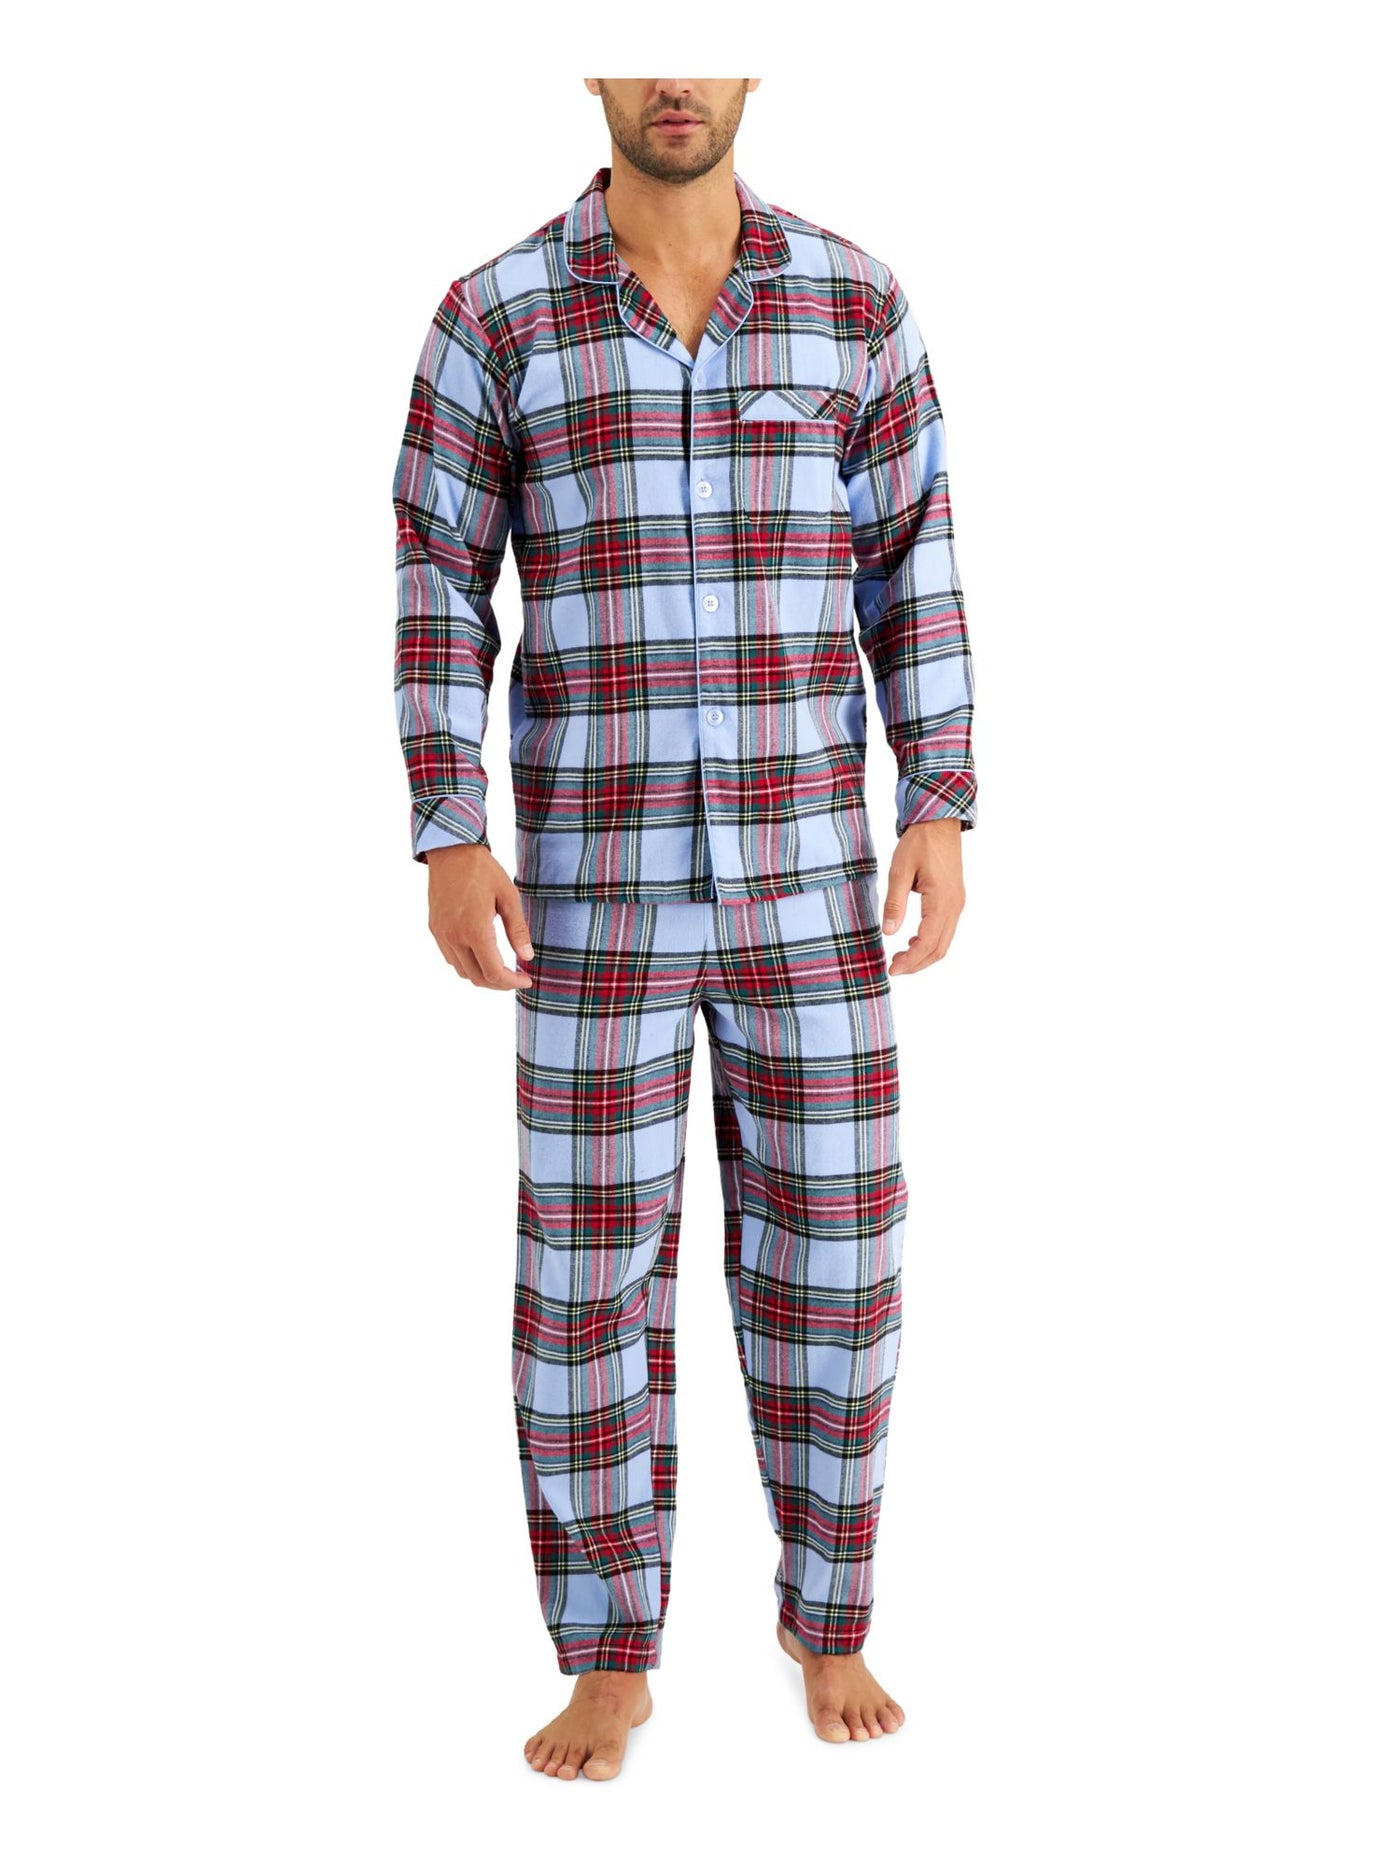 FAMILY PJs Mens Light Blue Plaid Button Up Top Straight leg Pants Knit Pajamas S